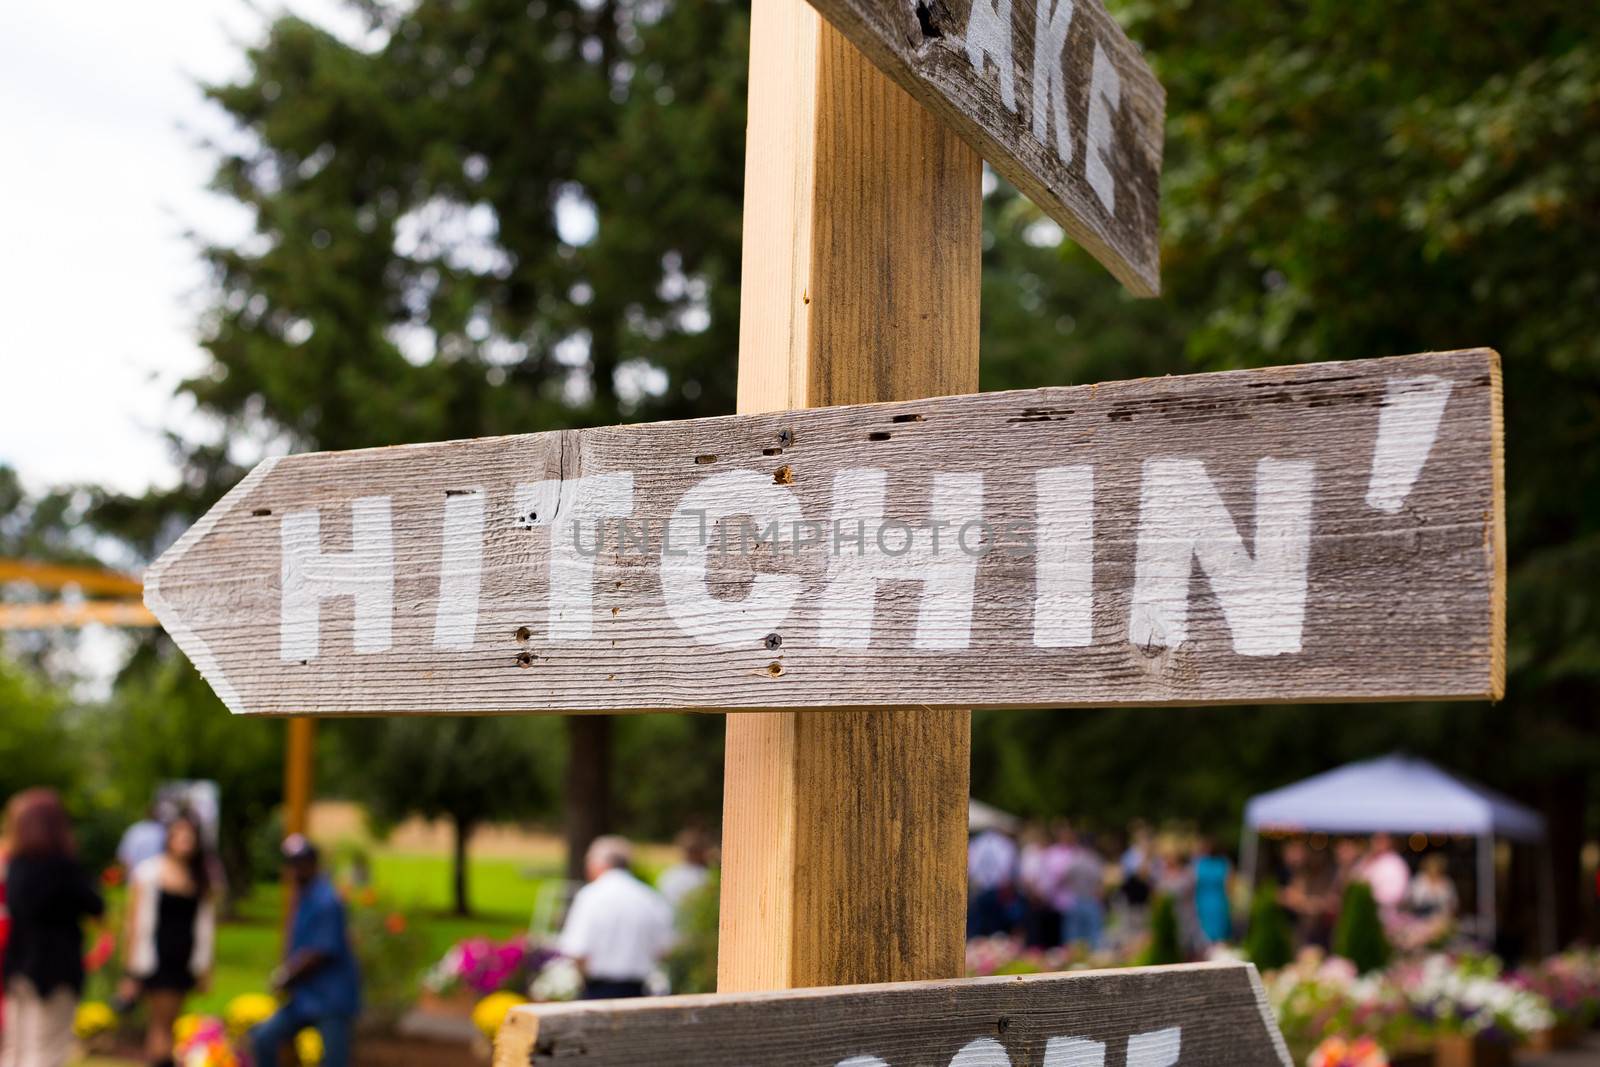 Hitchin Wedding Sign by joshuaraineyphotography